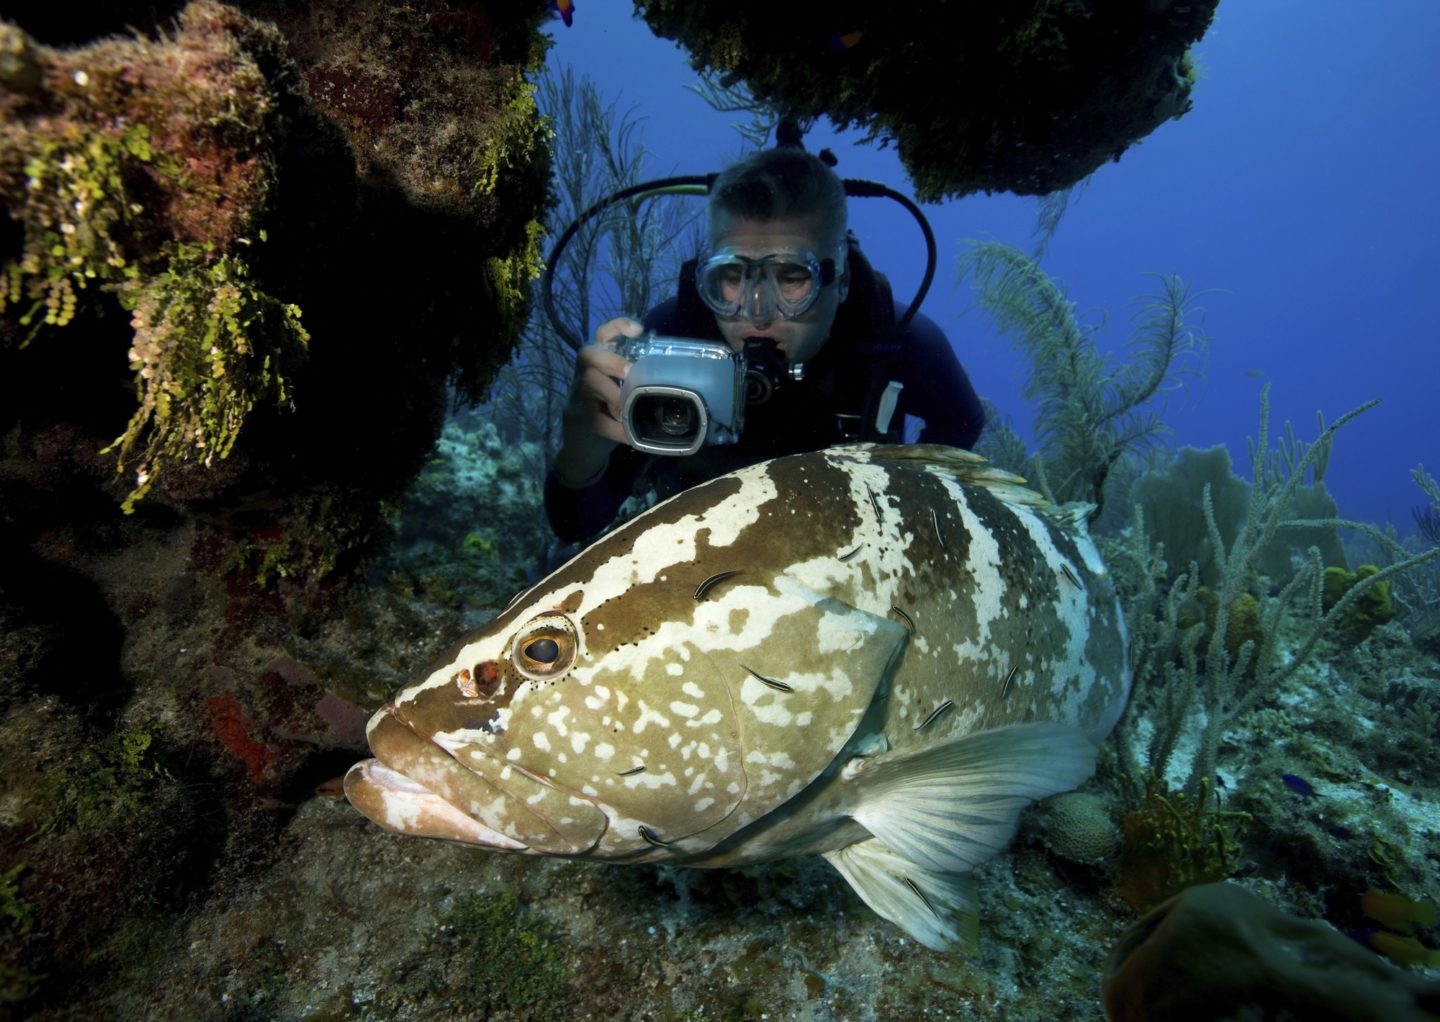 Underwater photographer and Nassau grouper (Epinephelus striatus), Bloody Bay, Little Cayman. The